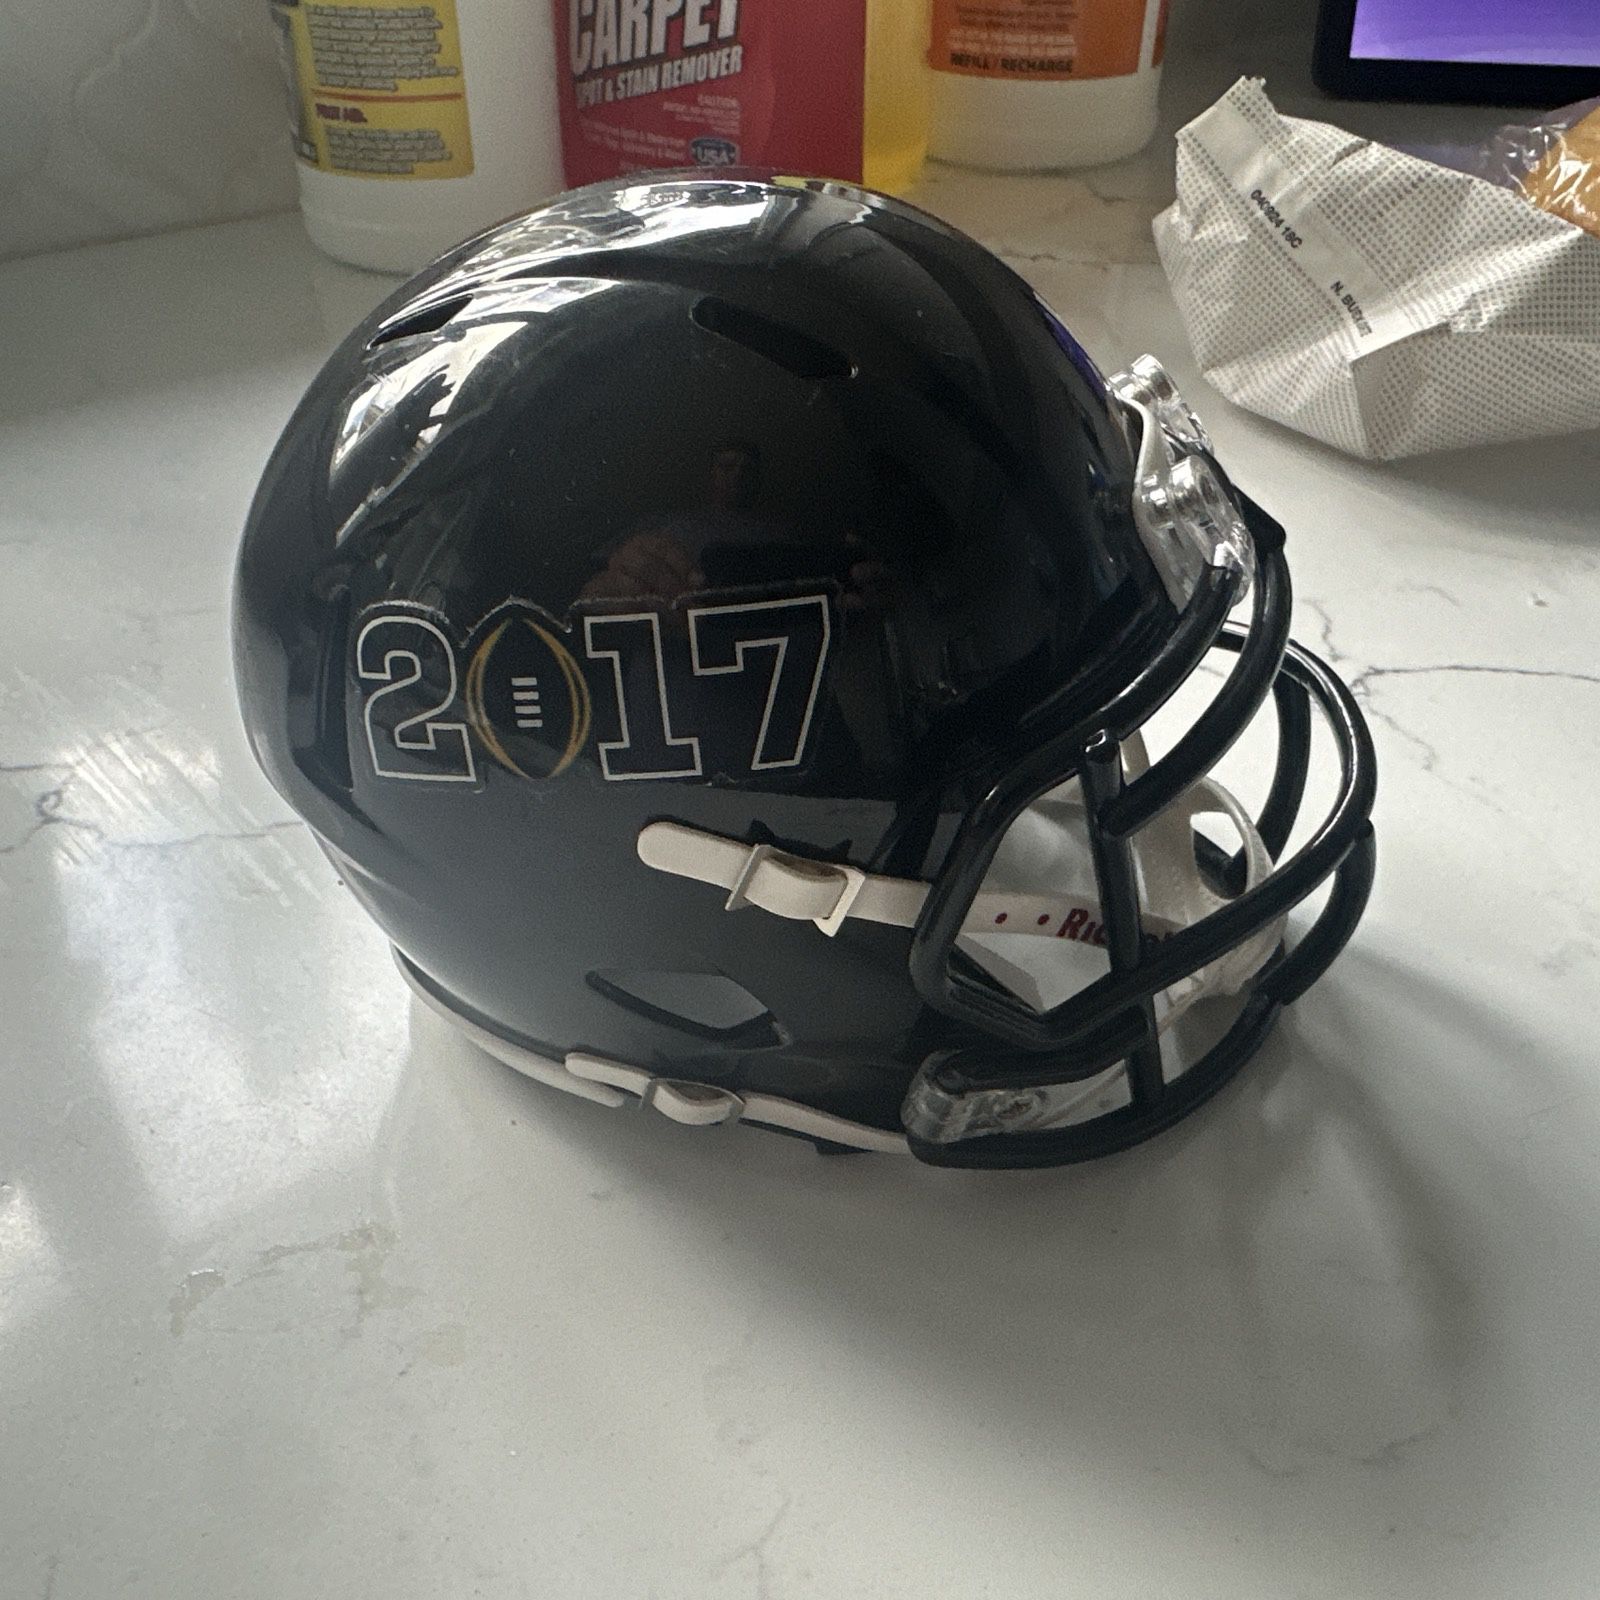 2017 College Football Championship Mini Helmet 